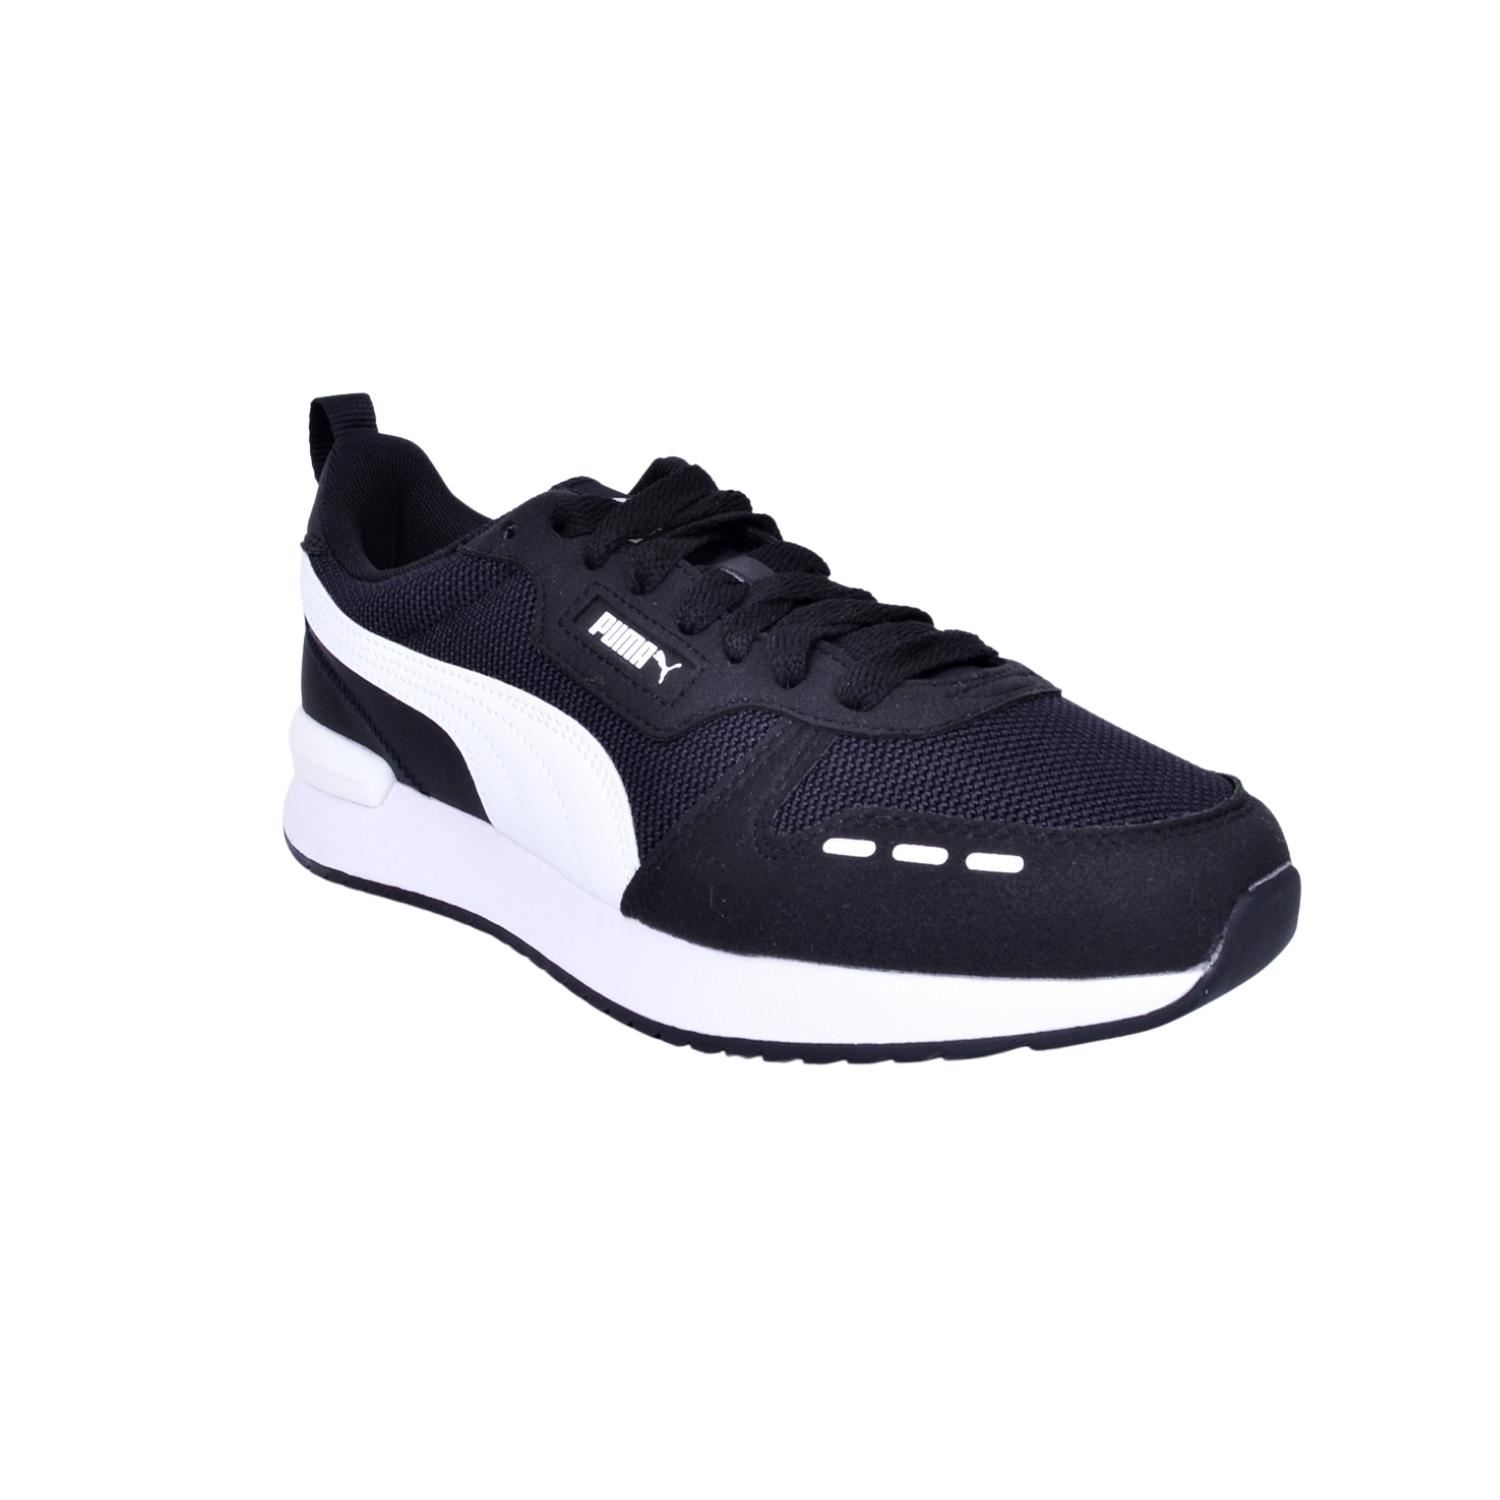 Puma 373117-01 R78 Siyah Spor Ayakkabı